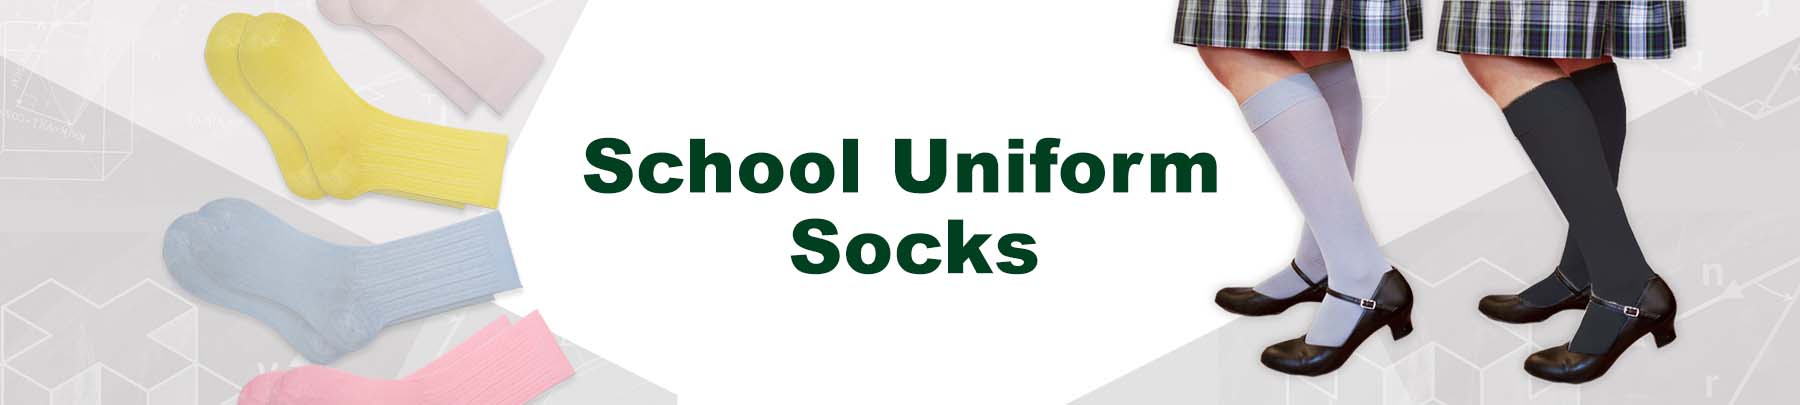 SCHOOL UNIFORM SOCKS